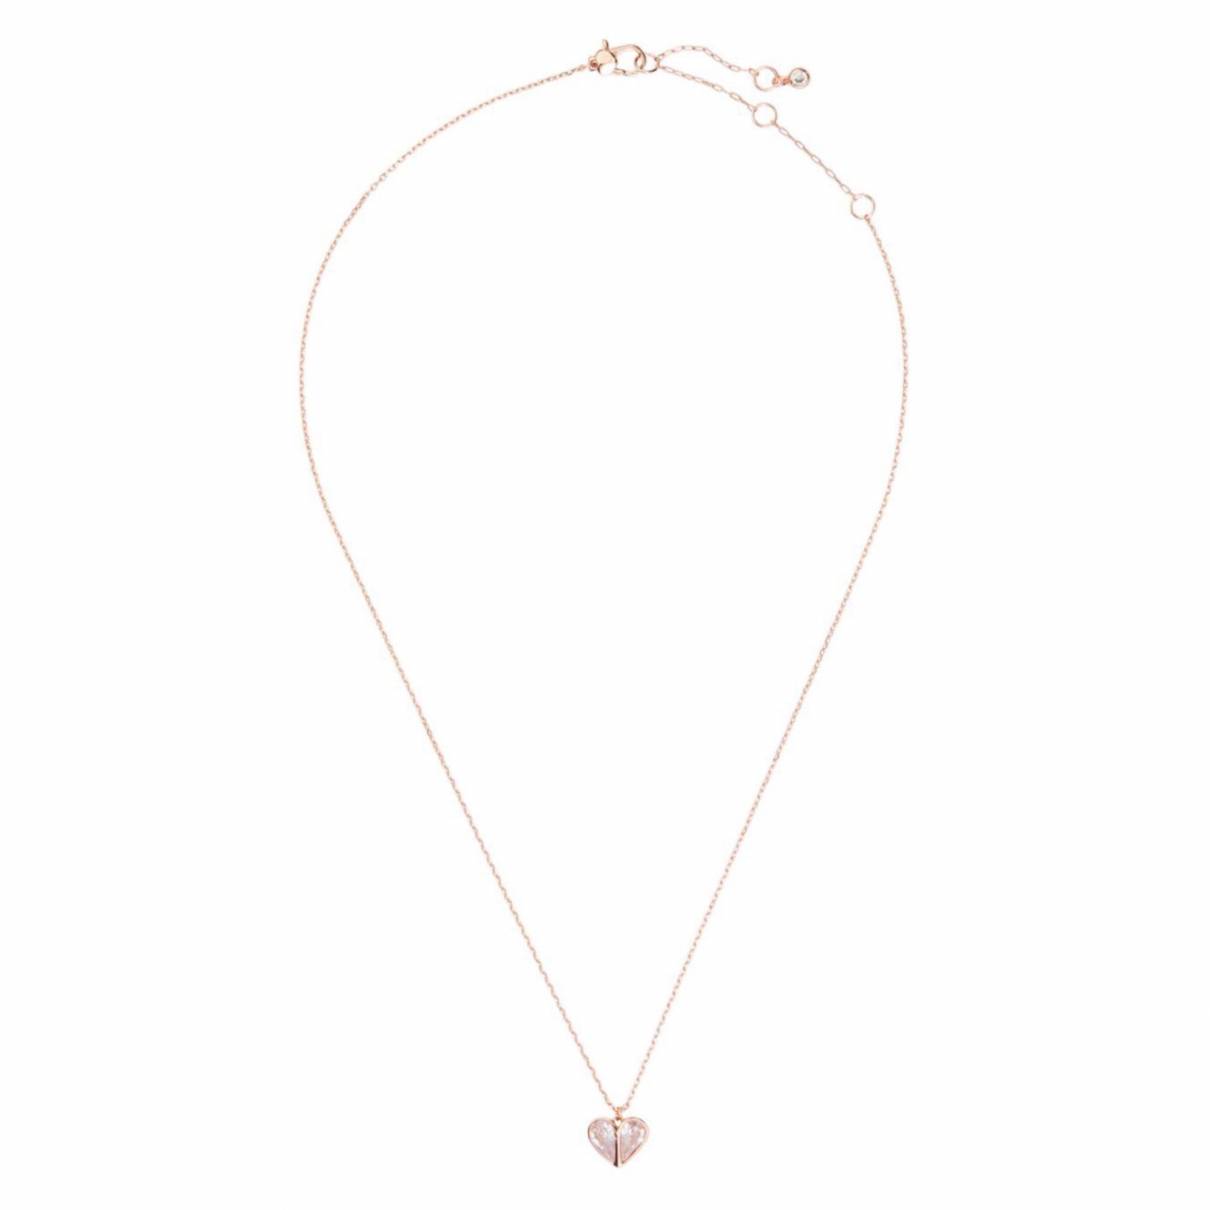 Buy Kate Spade Pink gold necklace online